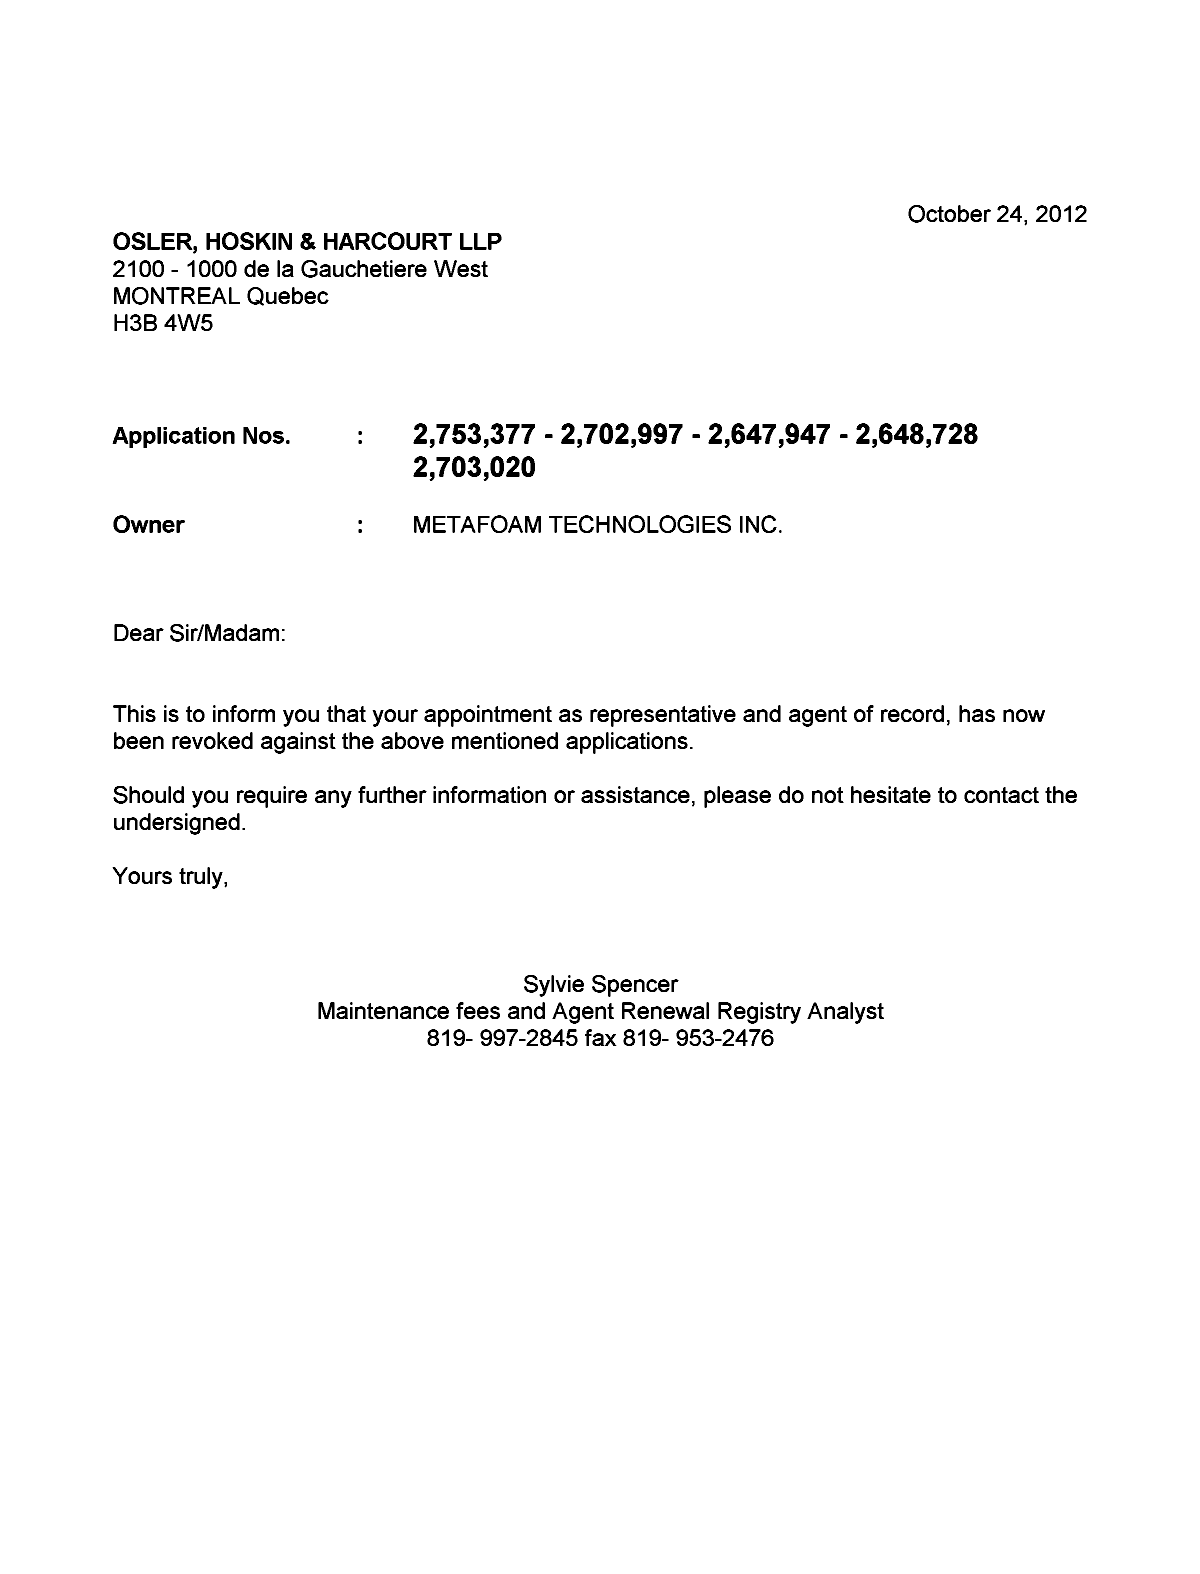 Canadian Patent Document 2702997. Correspondence 20121024. Image 1 of 1